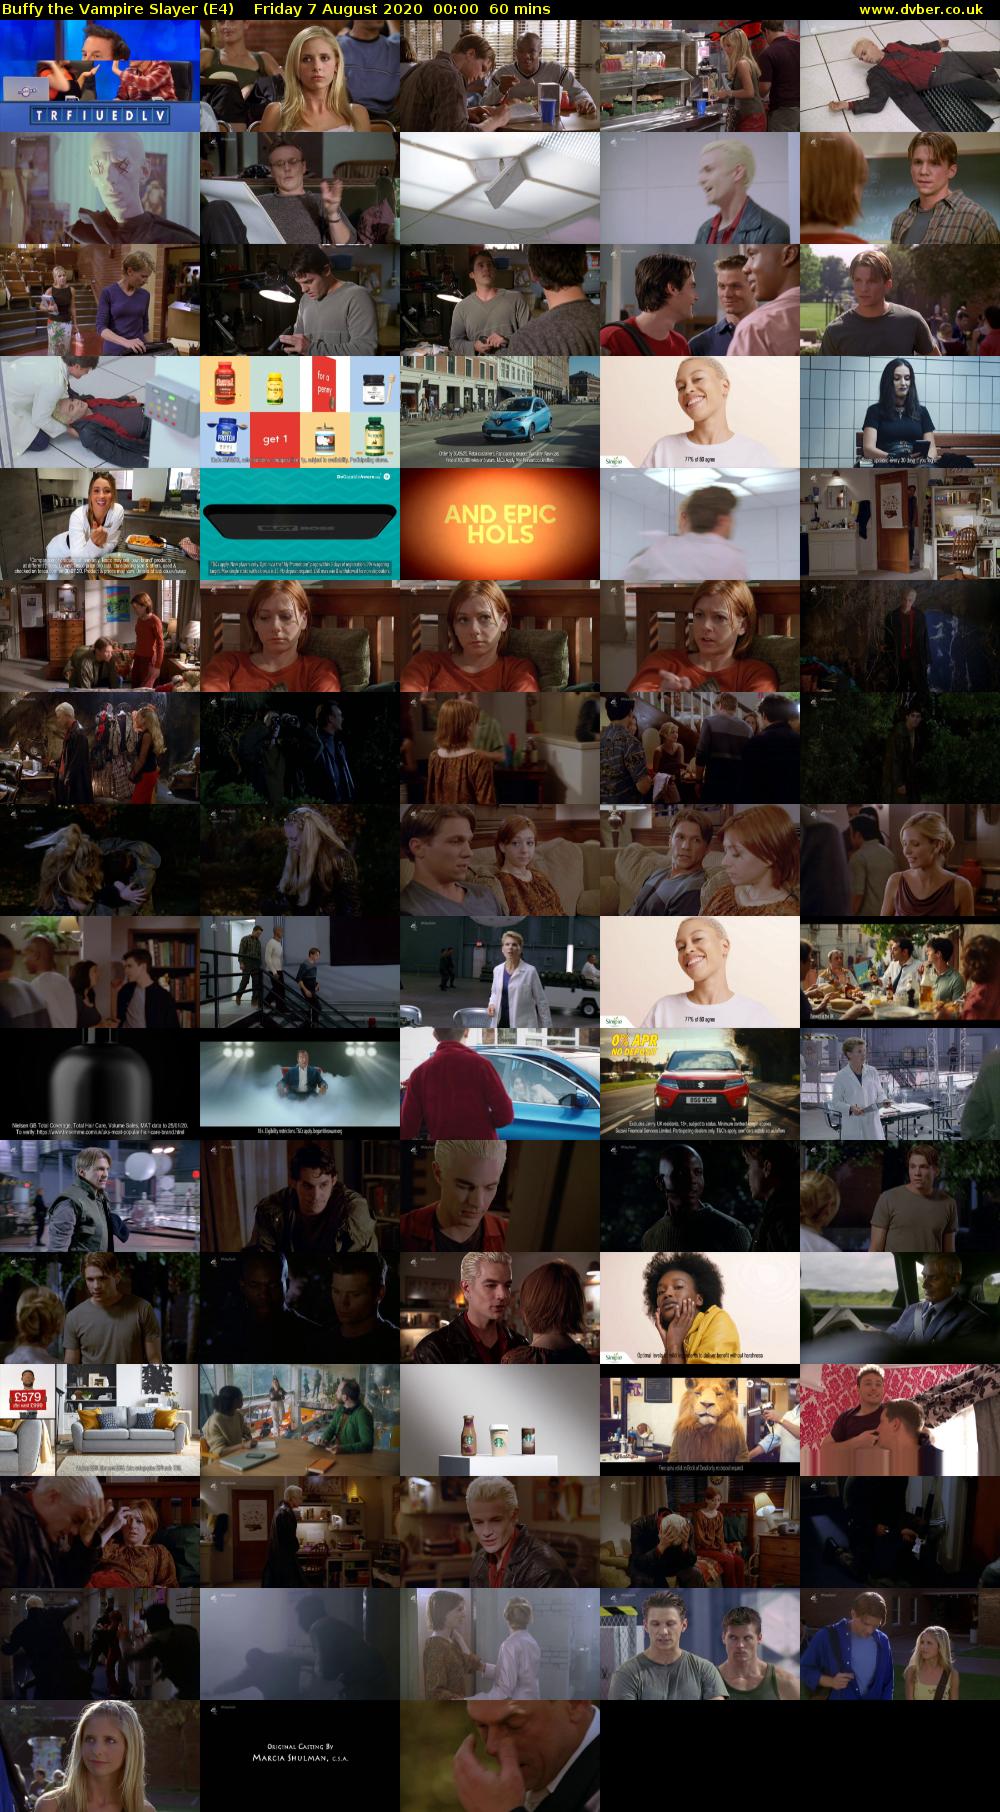 Buffy the Vampire Slayer (E4) Friday 7 August 2020 00:00 - 01:00